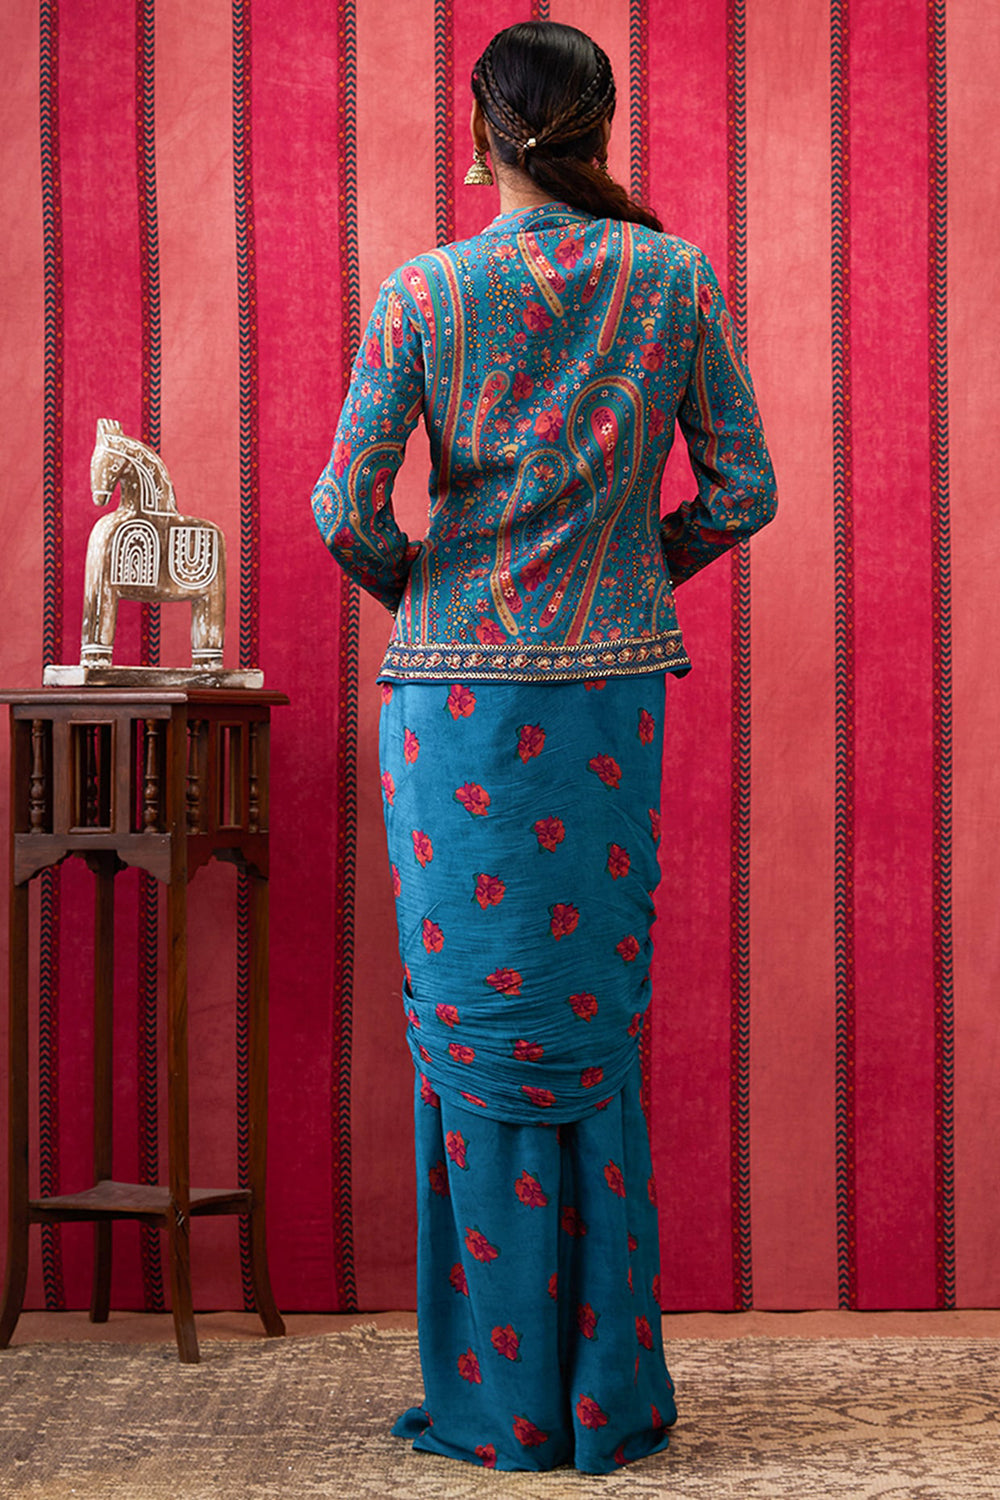 Qala Printed Drape Skirt With Embroidered Top